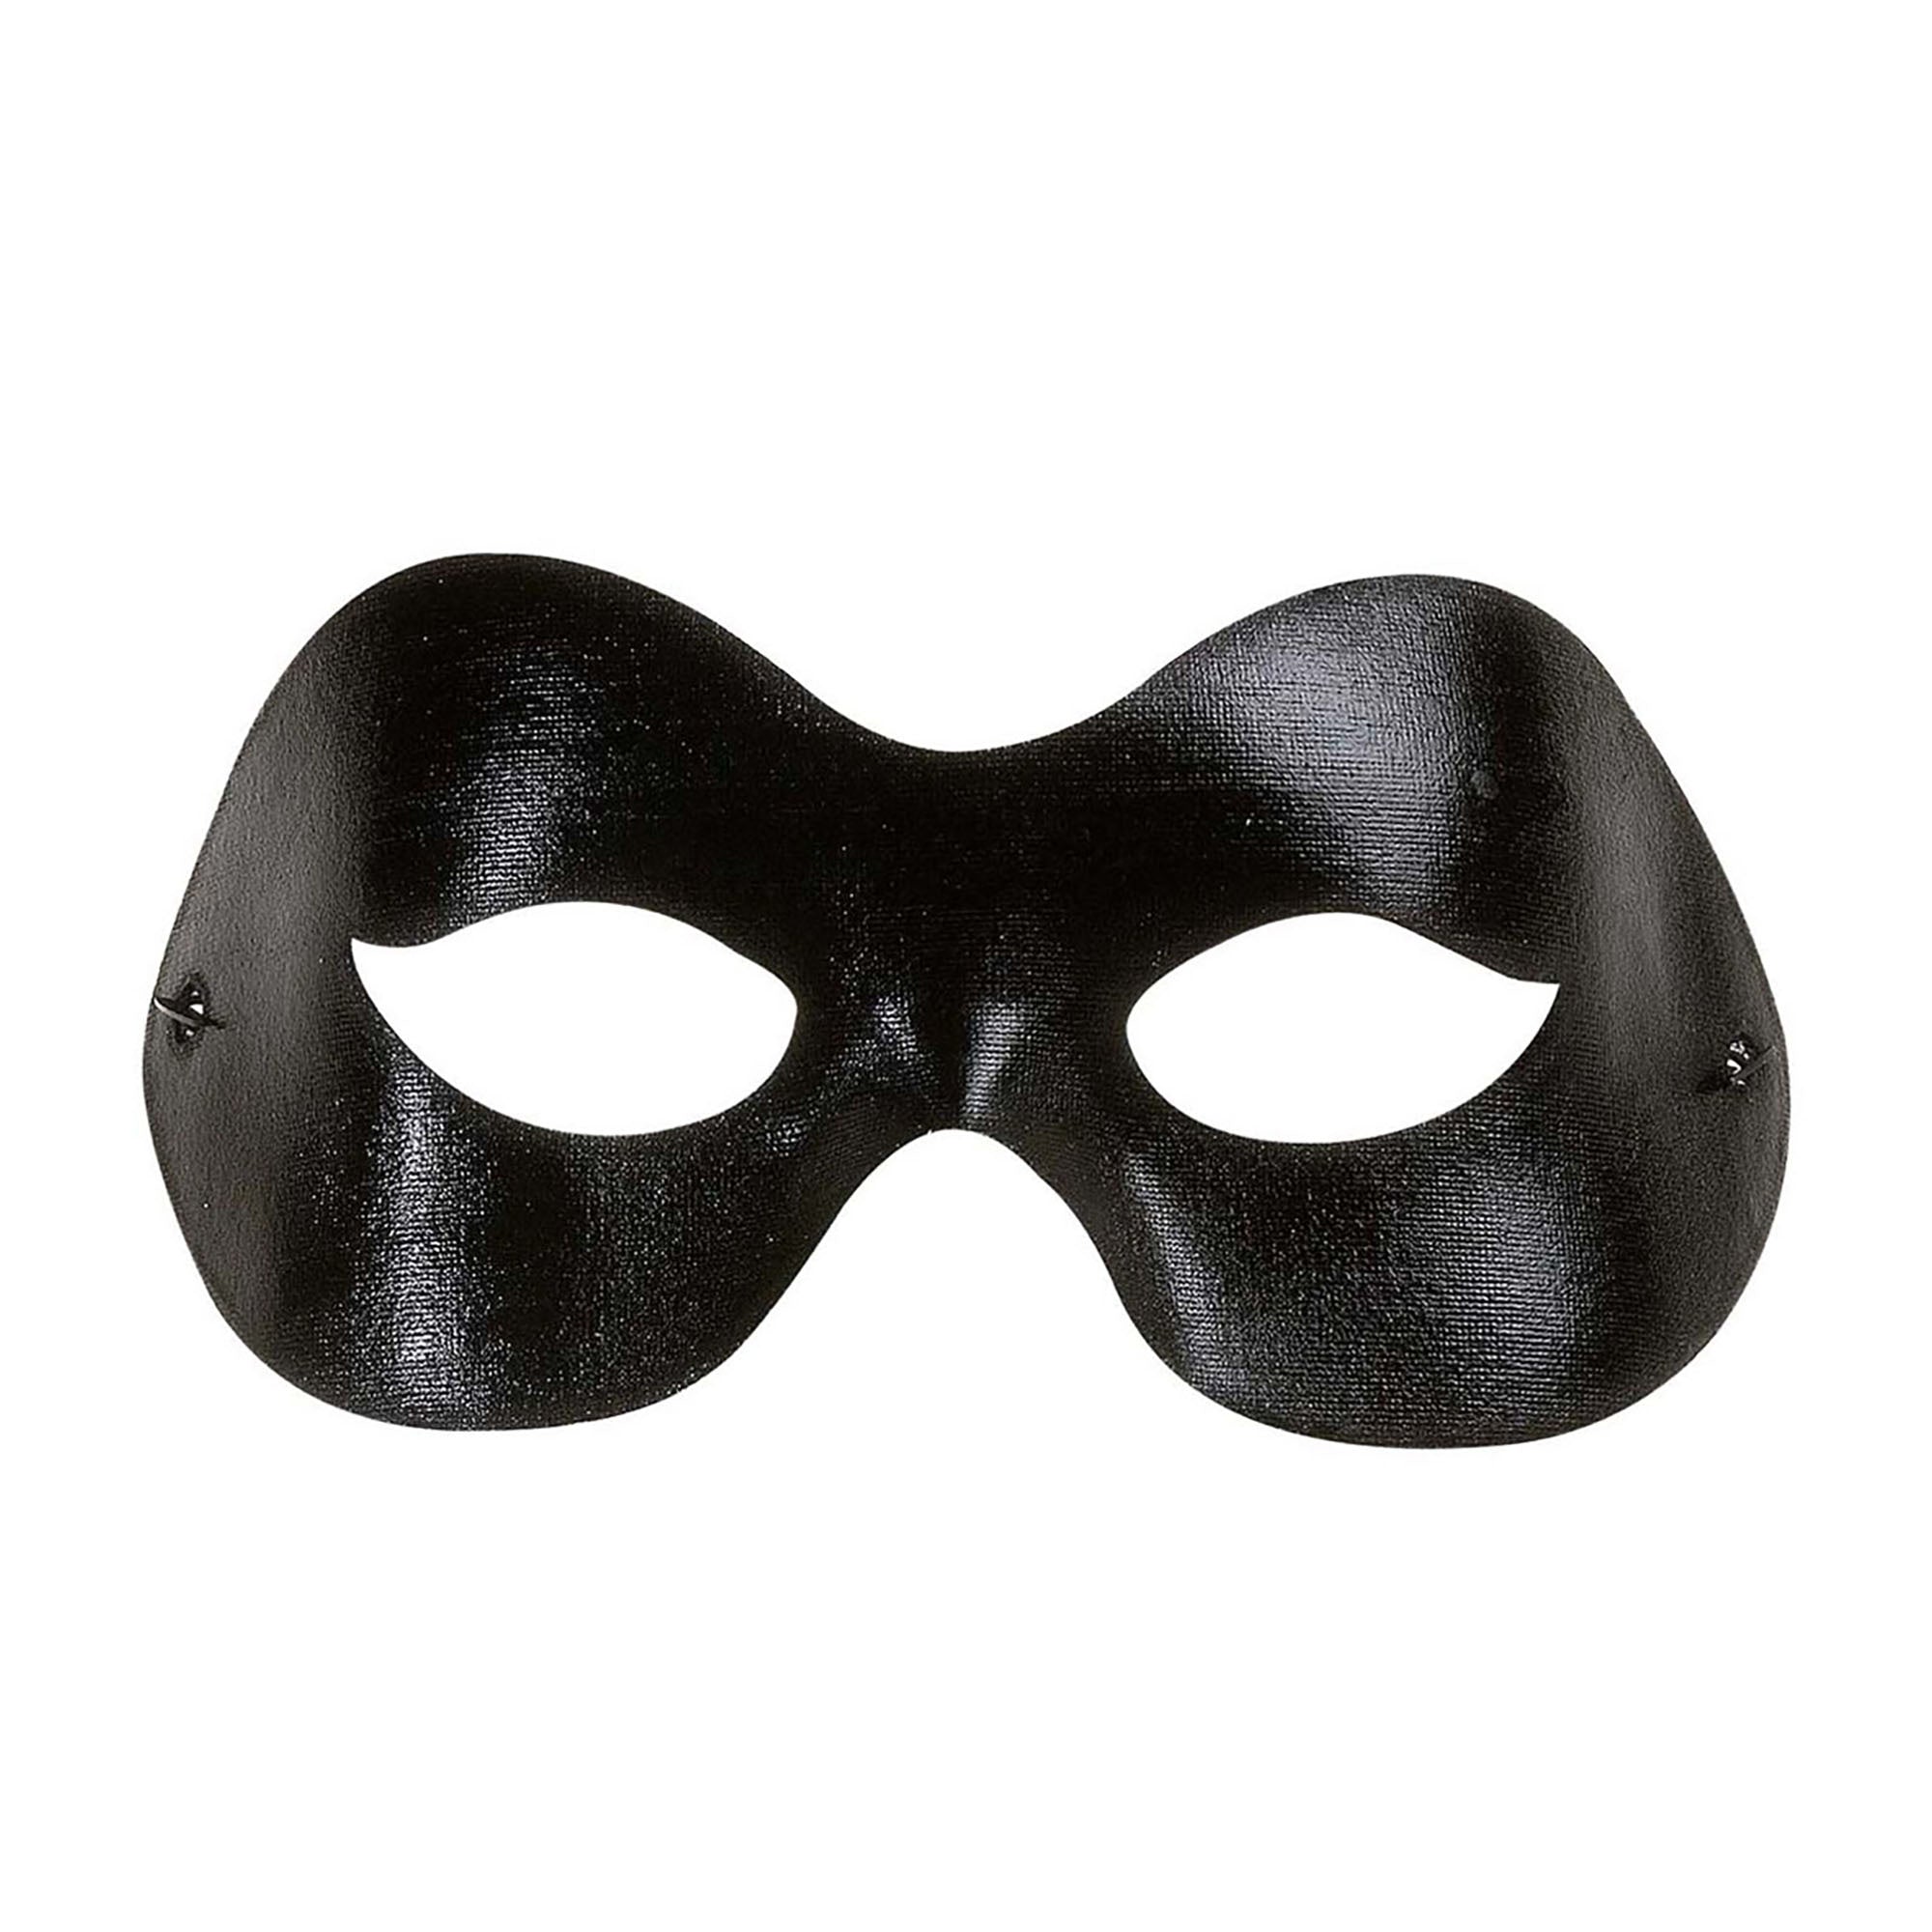 WIDMANN - Zwart rond en groot oogmasker voor volwassenen - Maskers > Masquerade masker